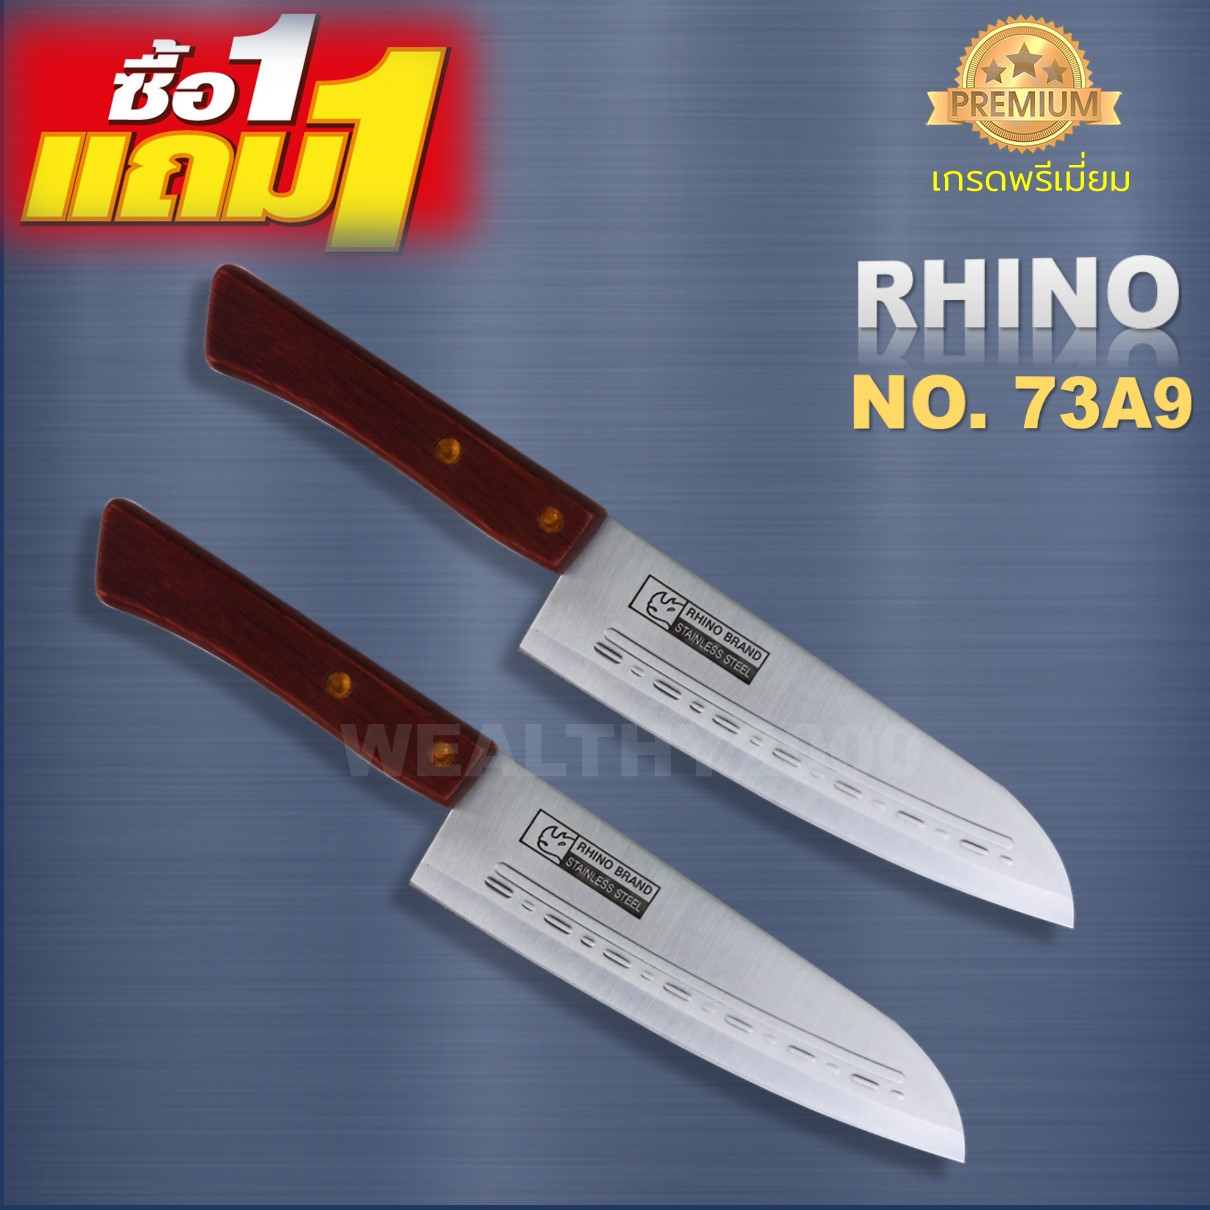 Rhino No.73A9 Utility Knife มีดเชฟ มีดทำครัว ด้ามไม้แท้ ใบมีดยาว 7 นิ้ว ทำจากเหล็กสแตนเลส น้ำหนักเบา เหมาะมือ คมกริบ ออกแบบสวยงาม ซื้อ 1 แถม 1